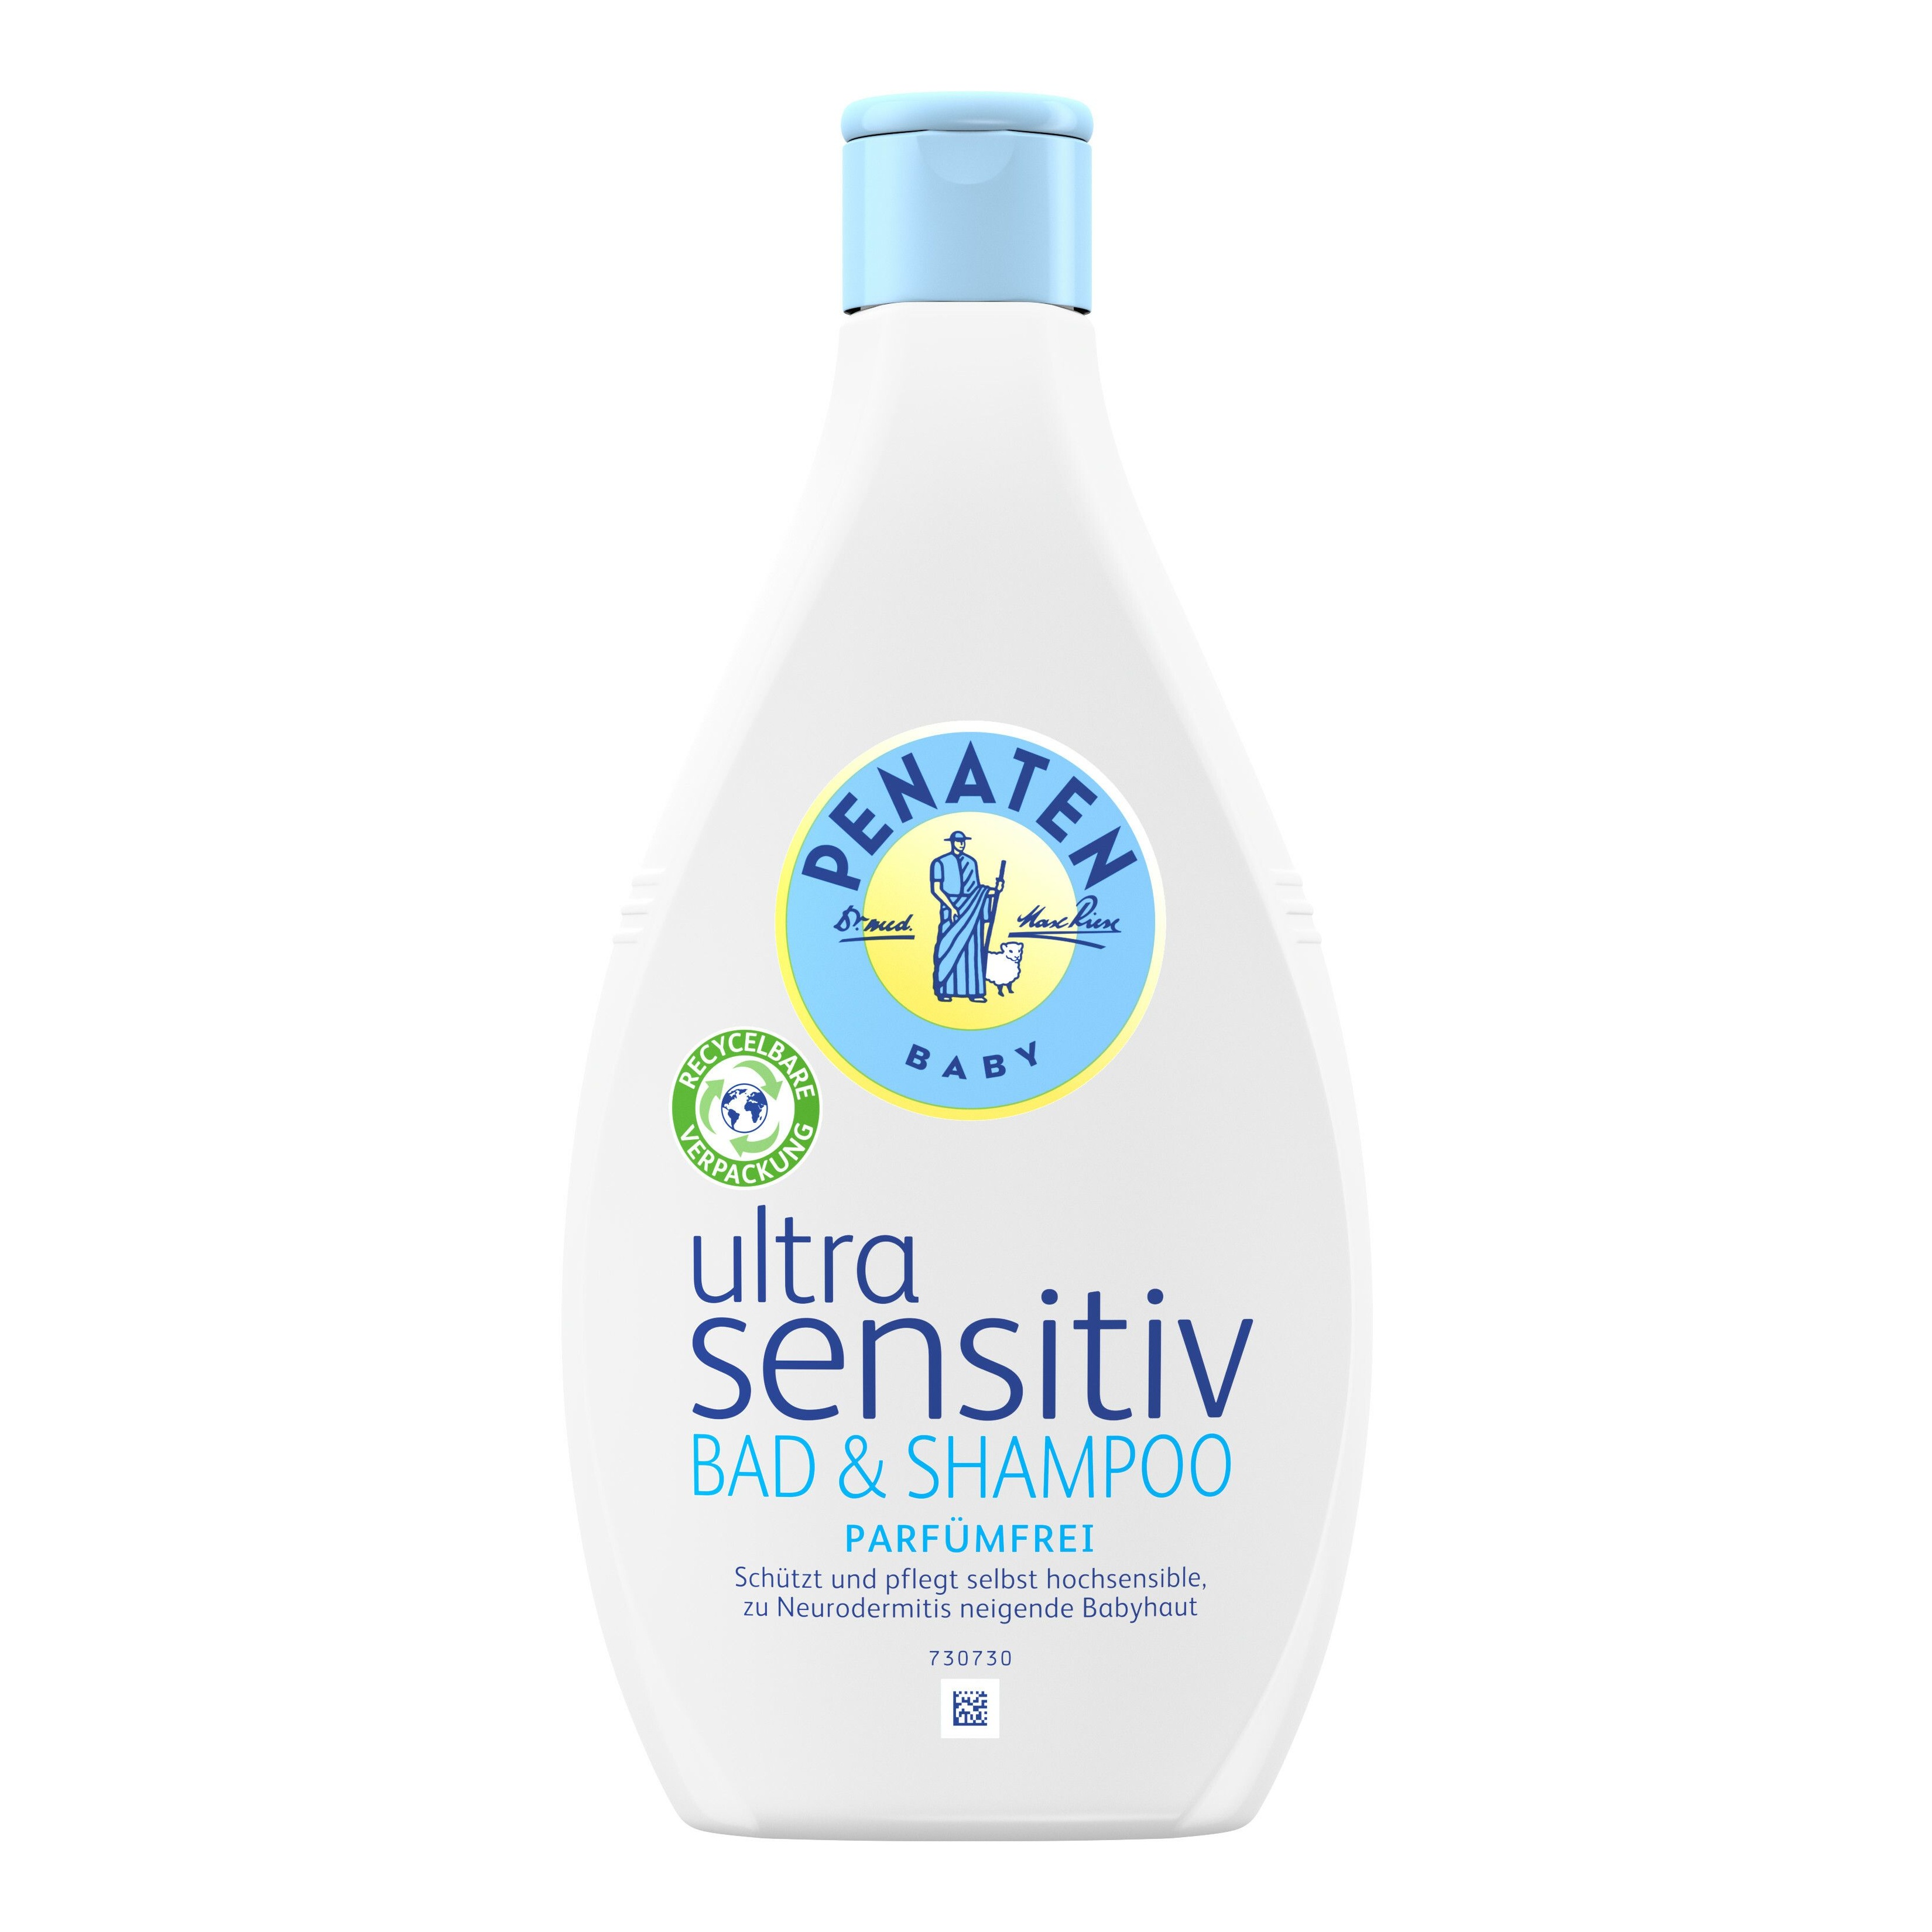 penaten ultra sensitiv bad shampoo